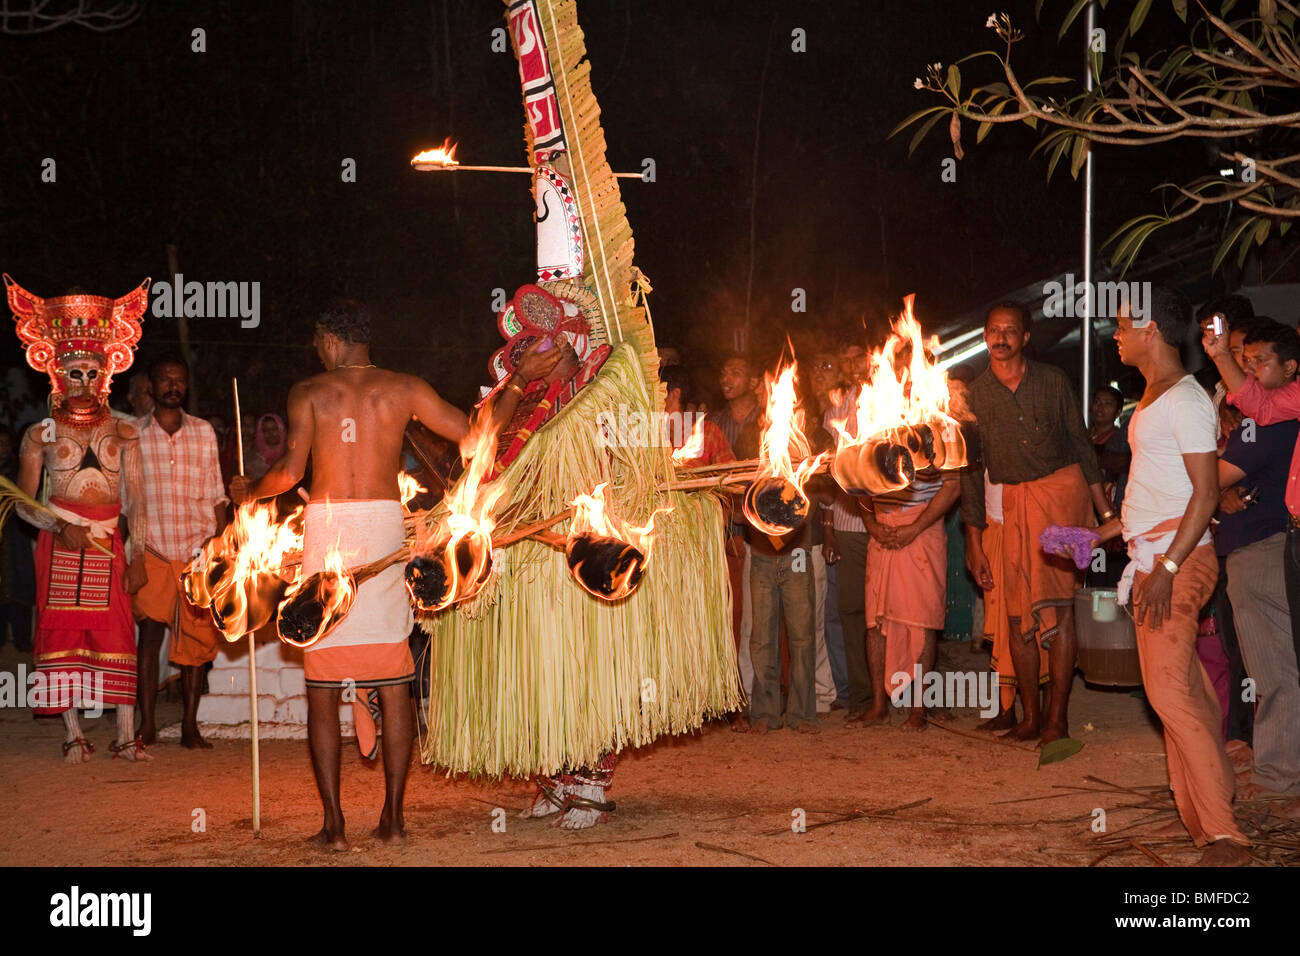 India, Kerala, Cannanore (Kannur), Theyyam, folk art ritual, Agni-Ghandakaran dancing in trance surrounded by flaming torches Stock Photo